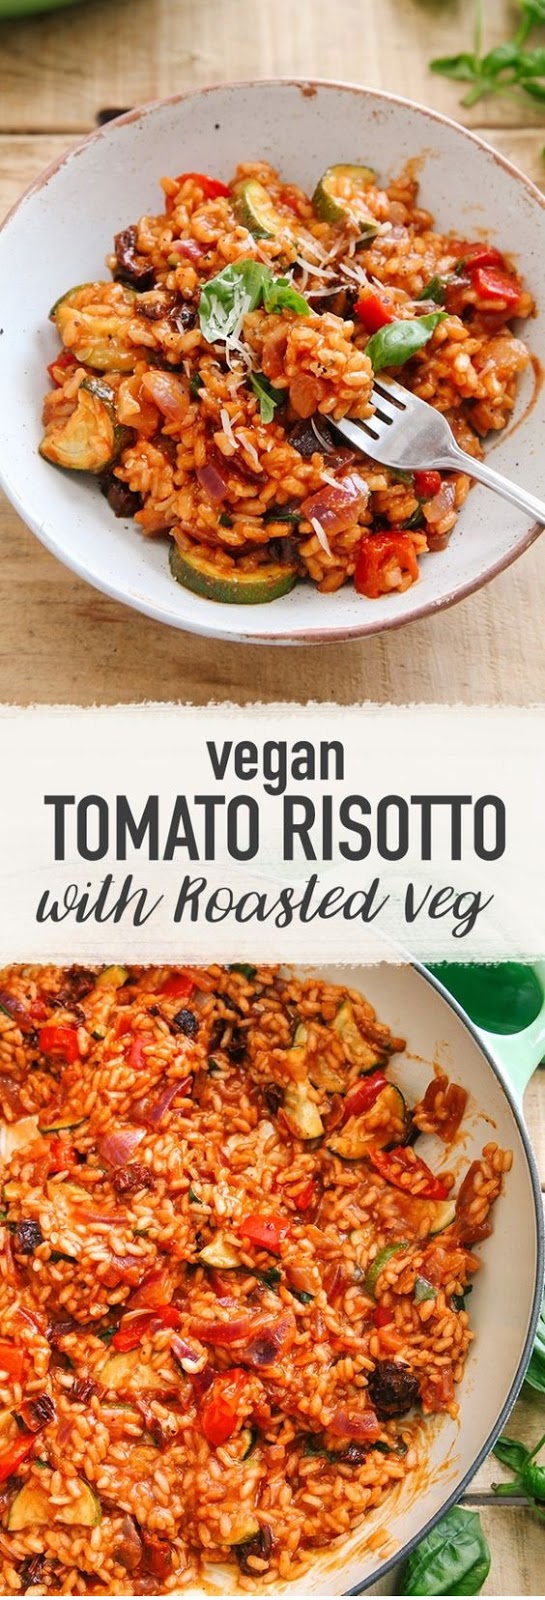 Creamy Tomato & Roasted Veg Risotto (Vegan)